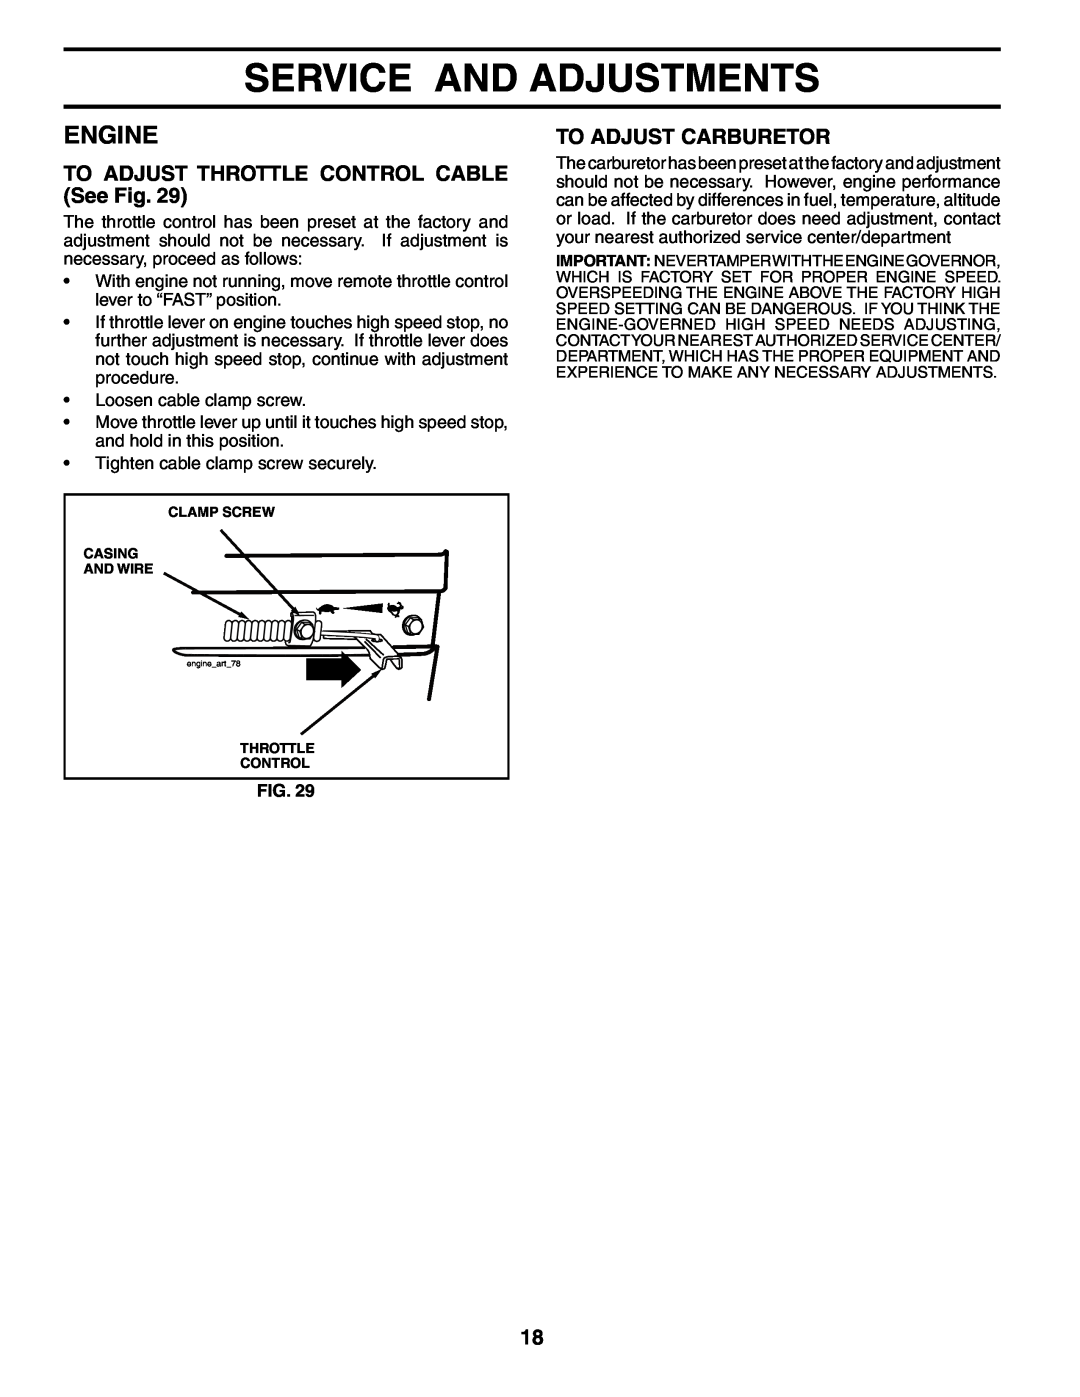 Poulan MRT500 owner manual TO ADJUST THROTTLE CONTROL CABLE See Fig, To Adjust Carburetor, Service And Adjustments, Engine 